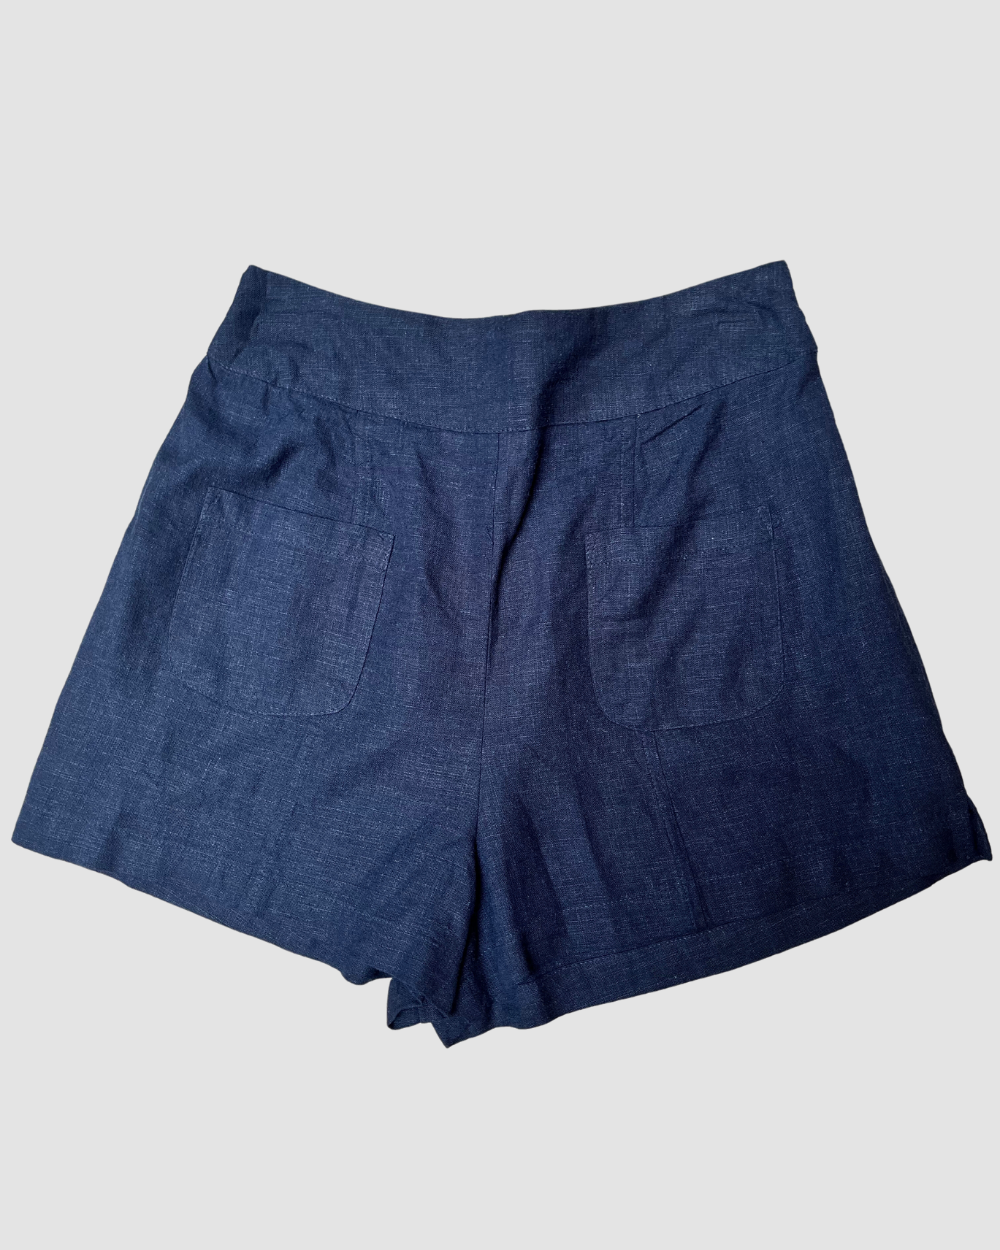 BOG Collective Navy Linen Shorts